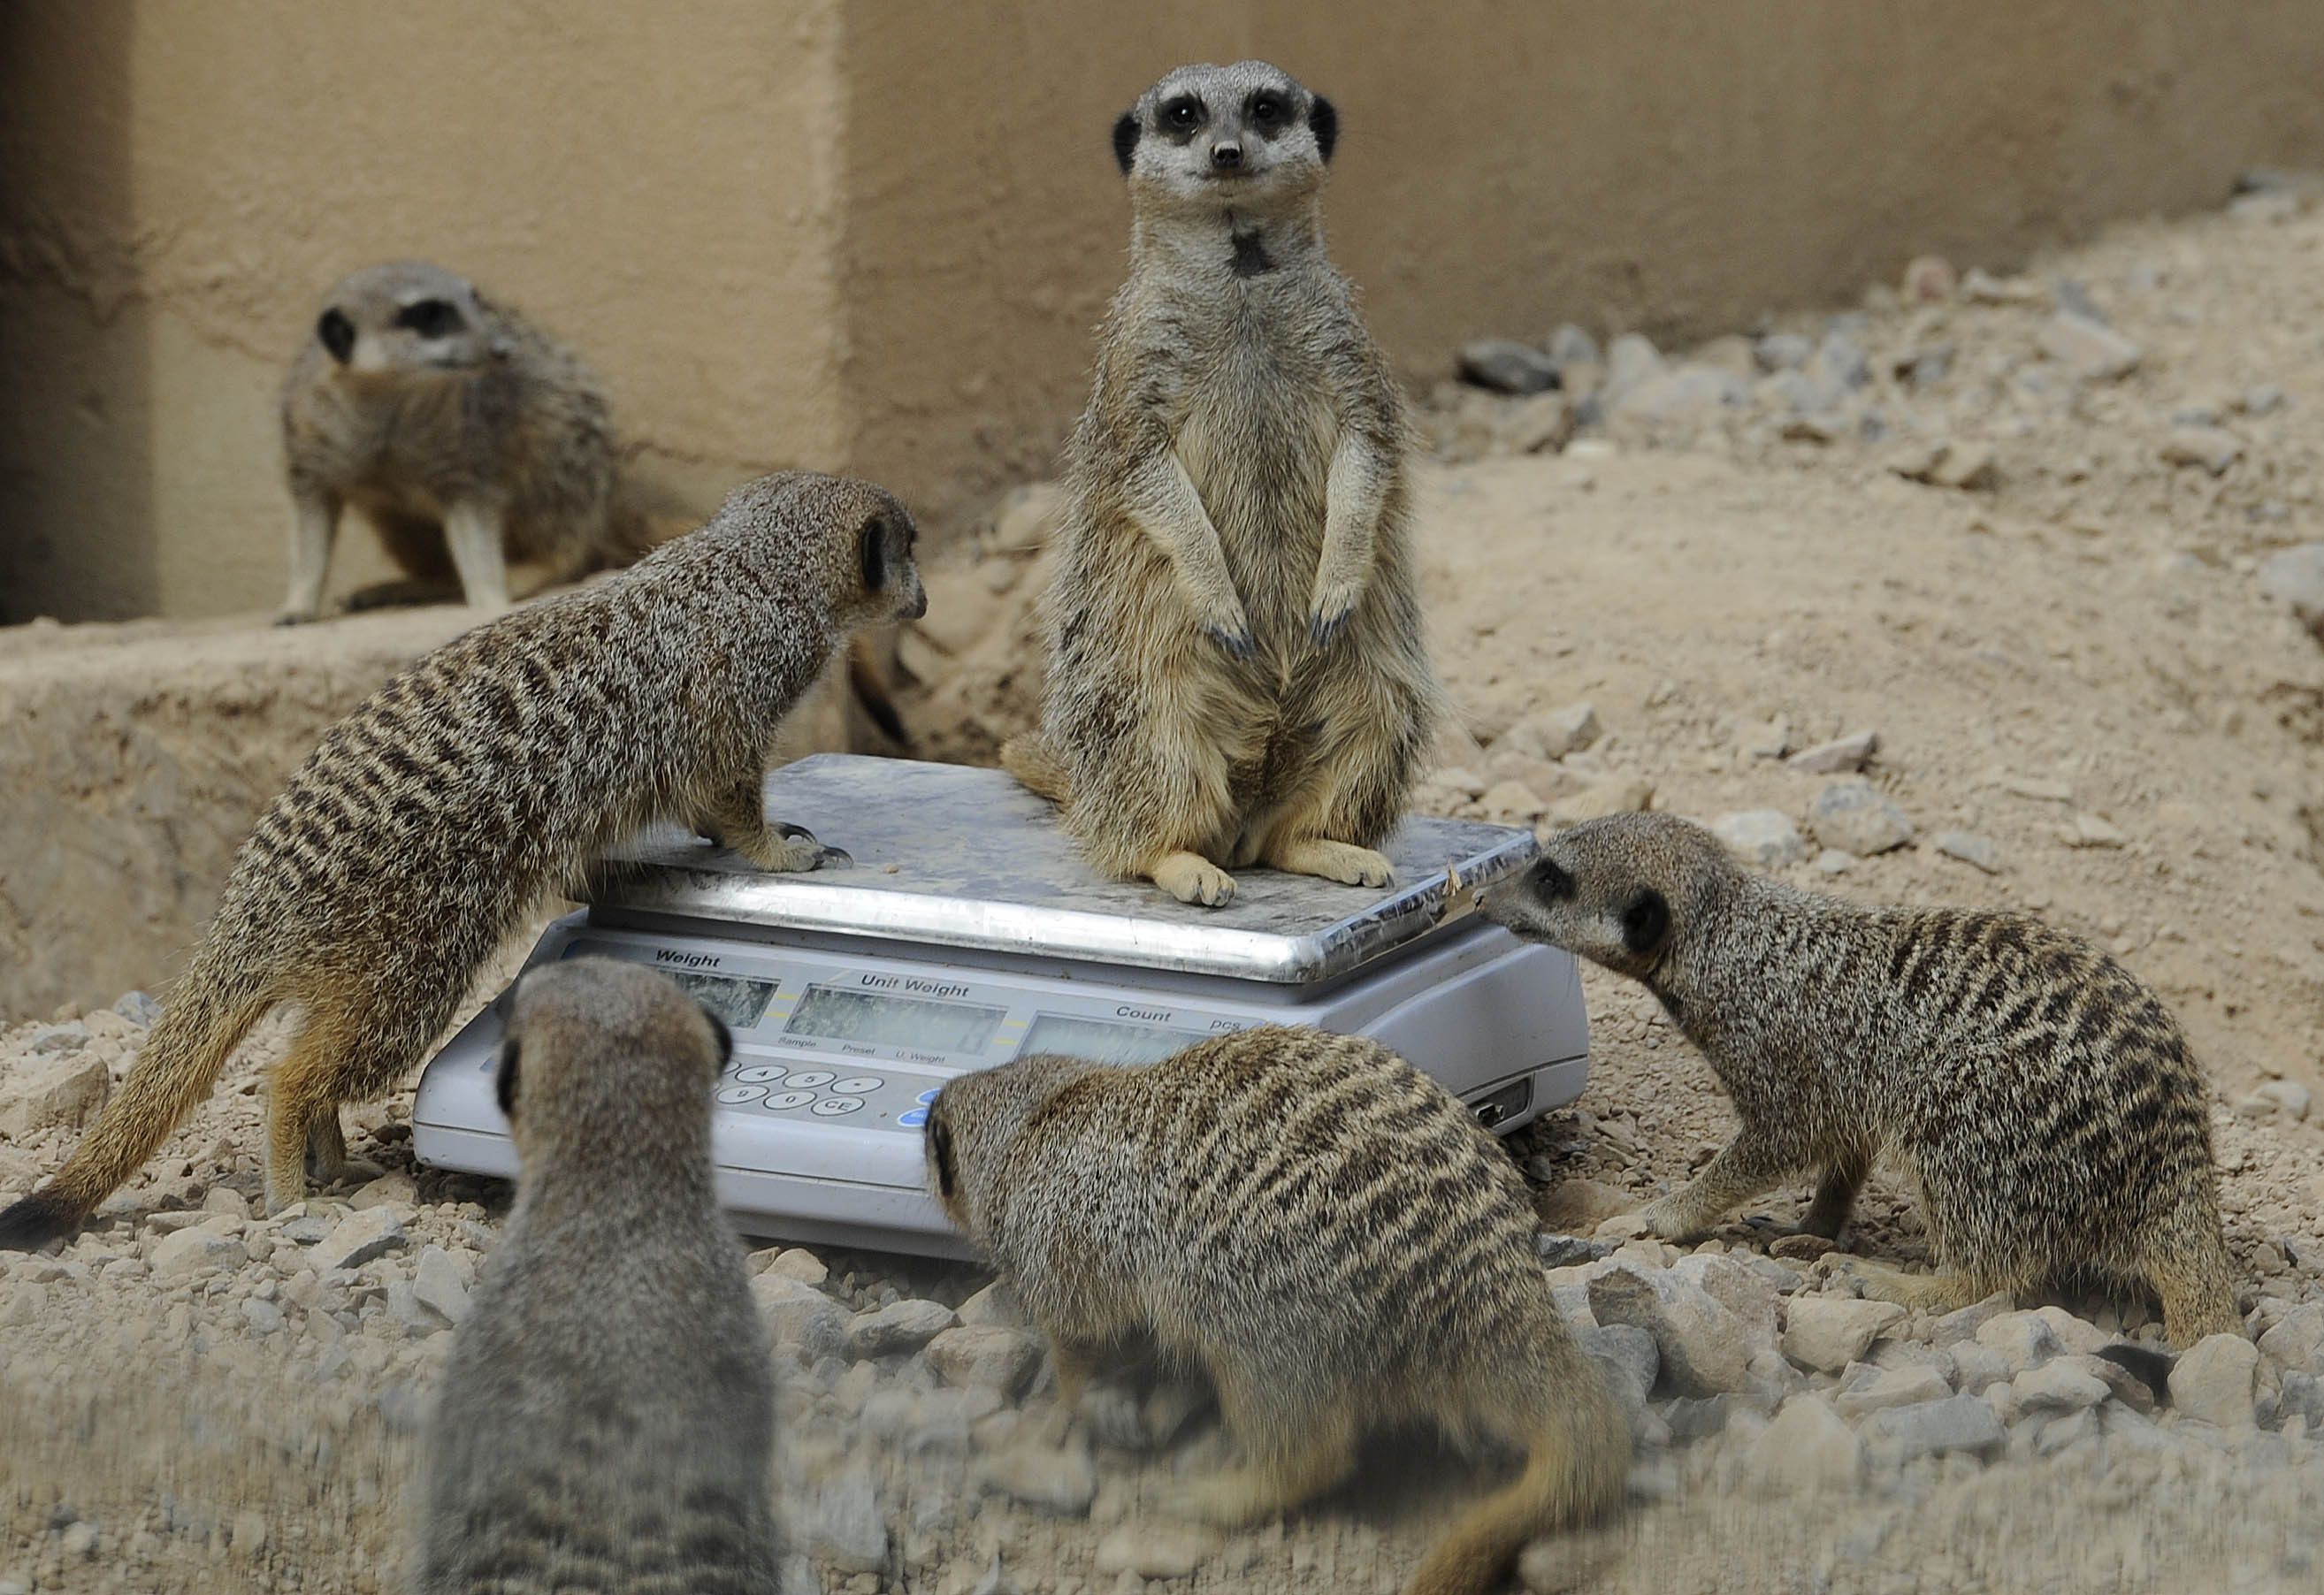 Zoo animals get measured - pictures